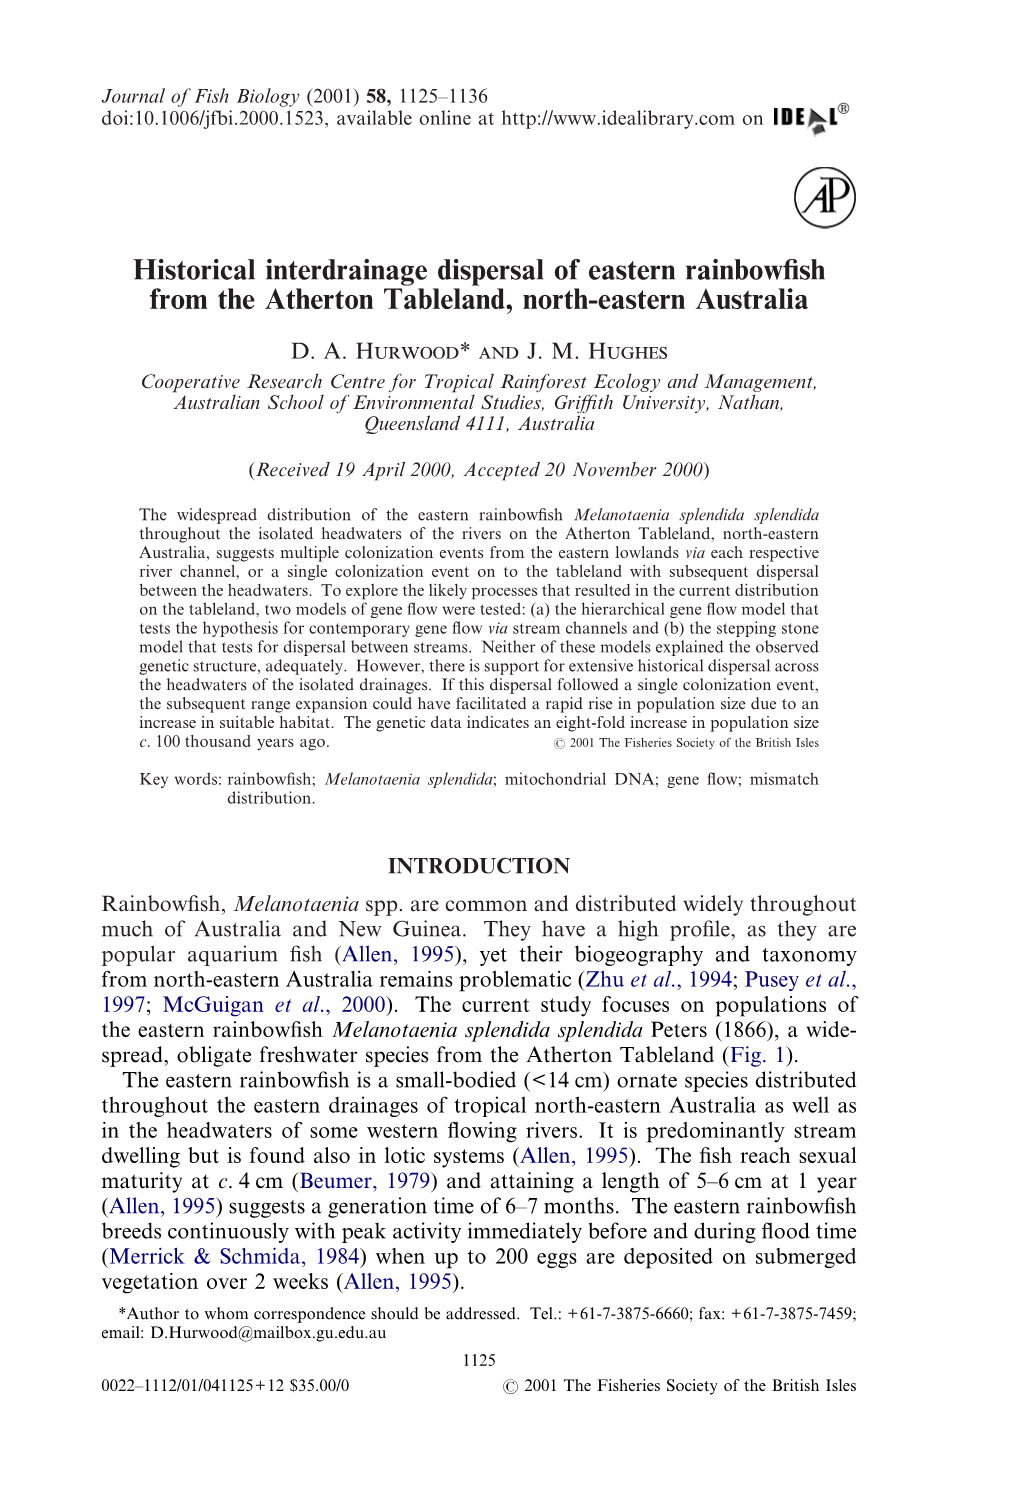 Hurwood (2001) Historical Interdrainage Dispersal of Eastern Rainbowfish from the Atherton Tableland, North-Eastern Australia